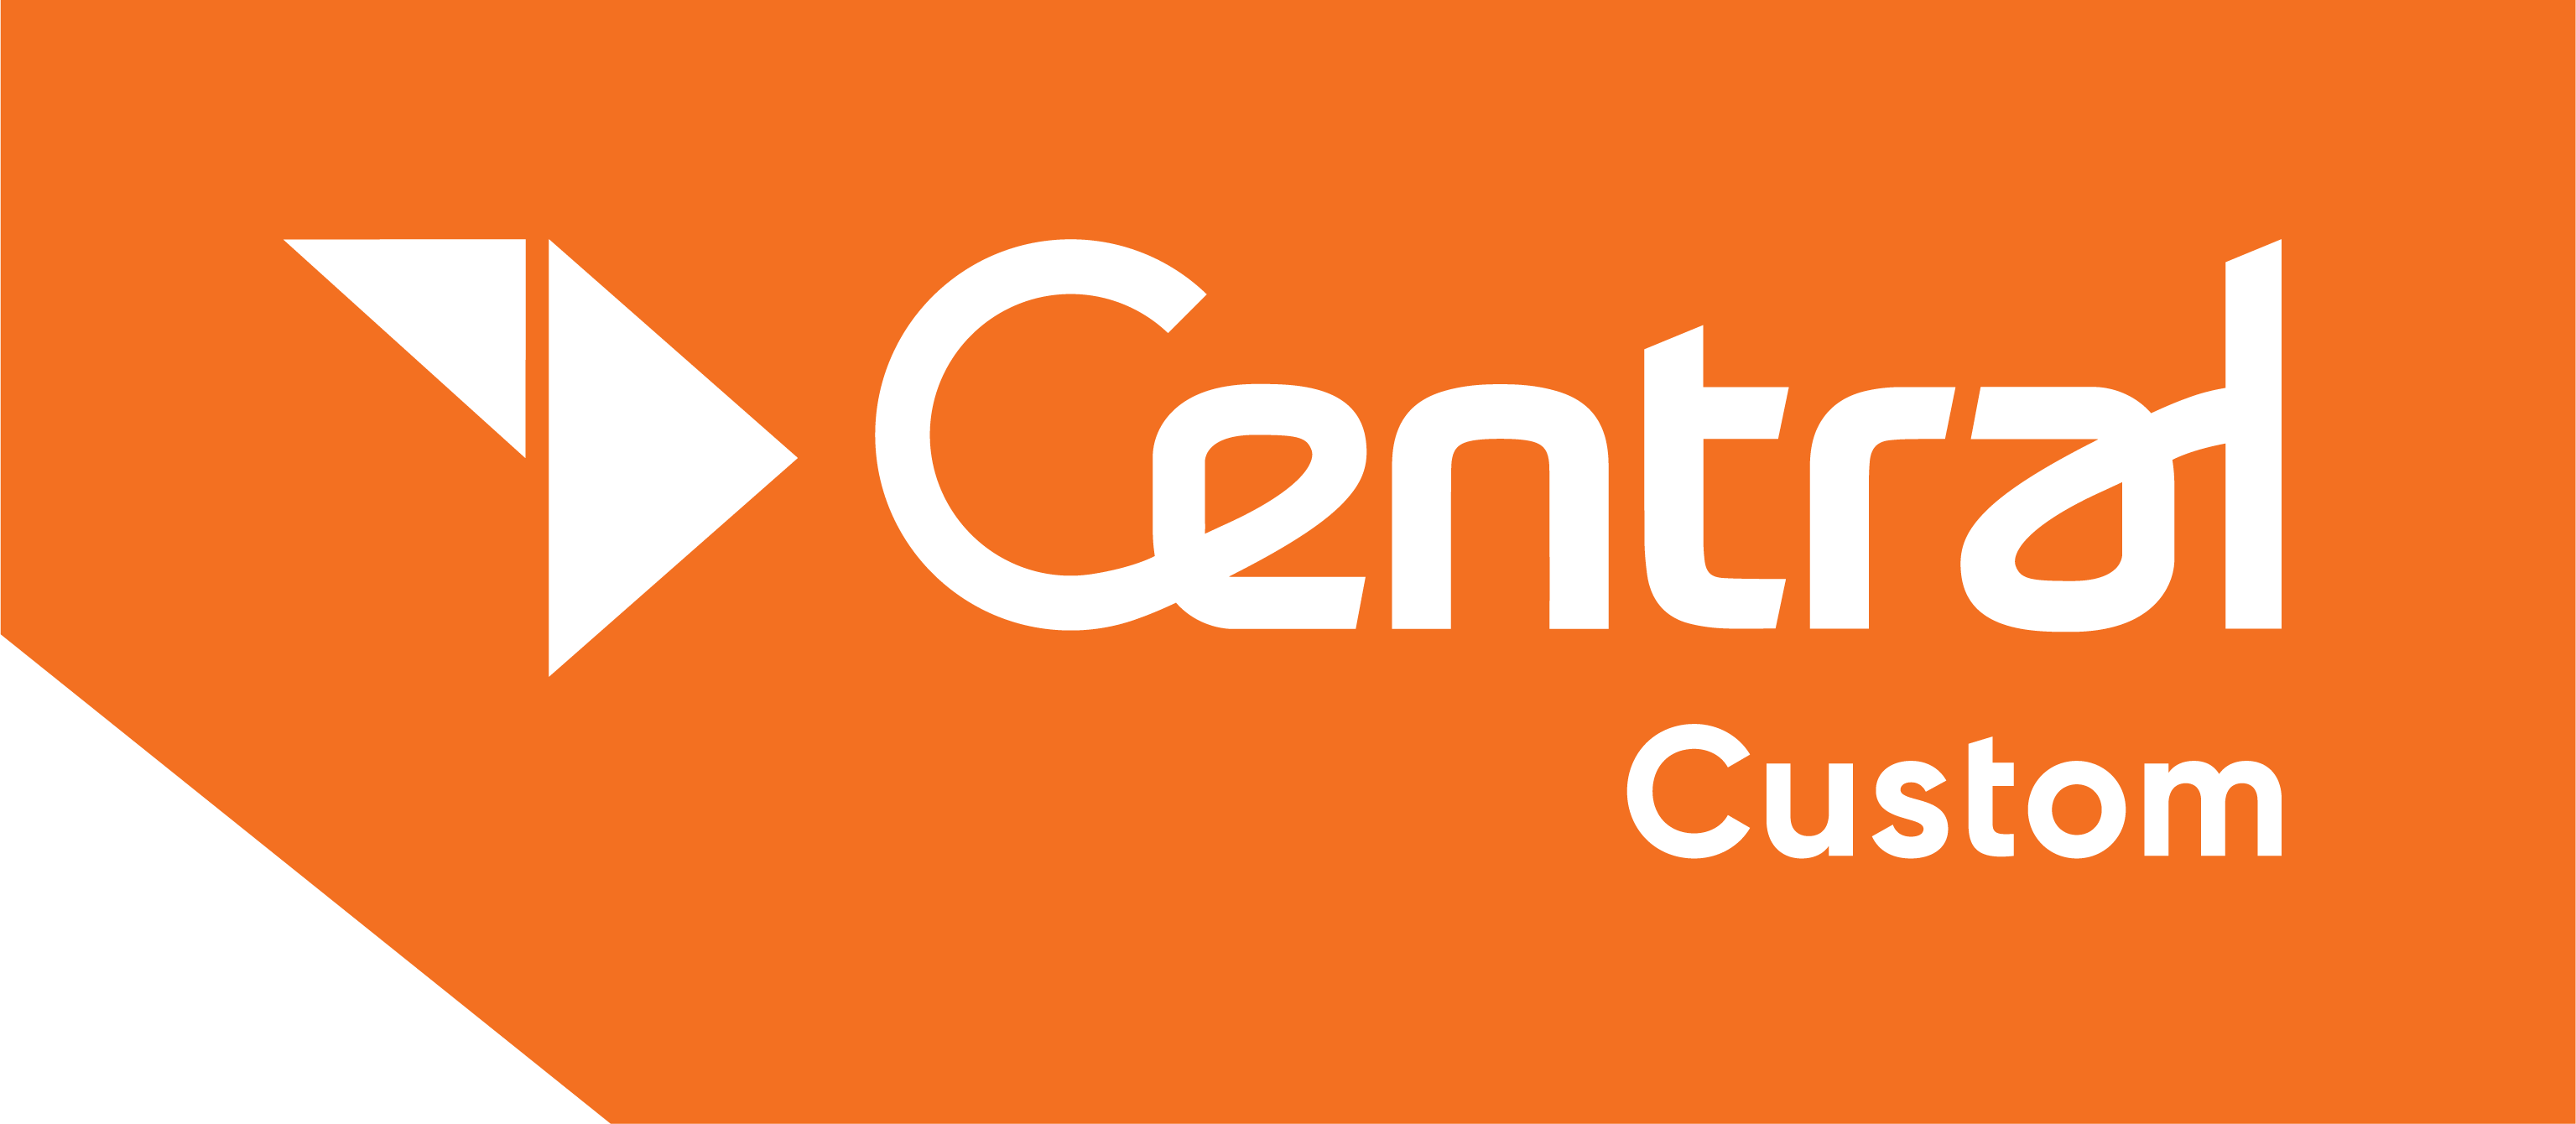 MASTER_Central_Custom_Logo_RGB